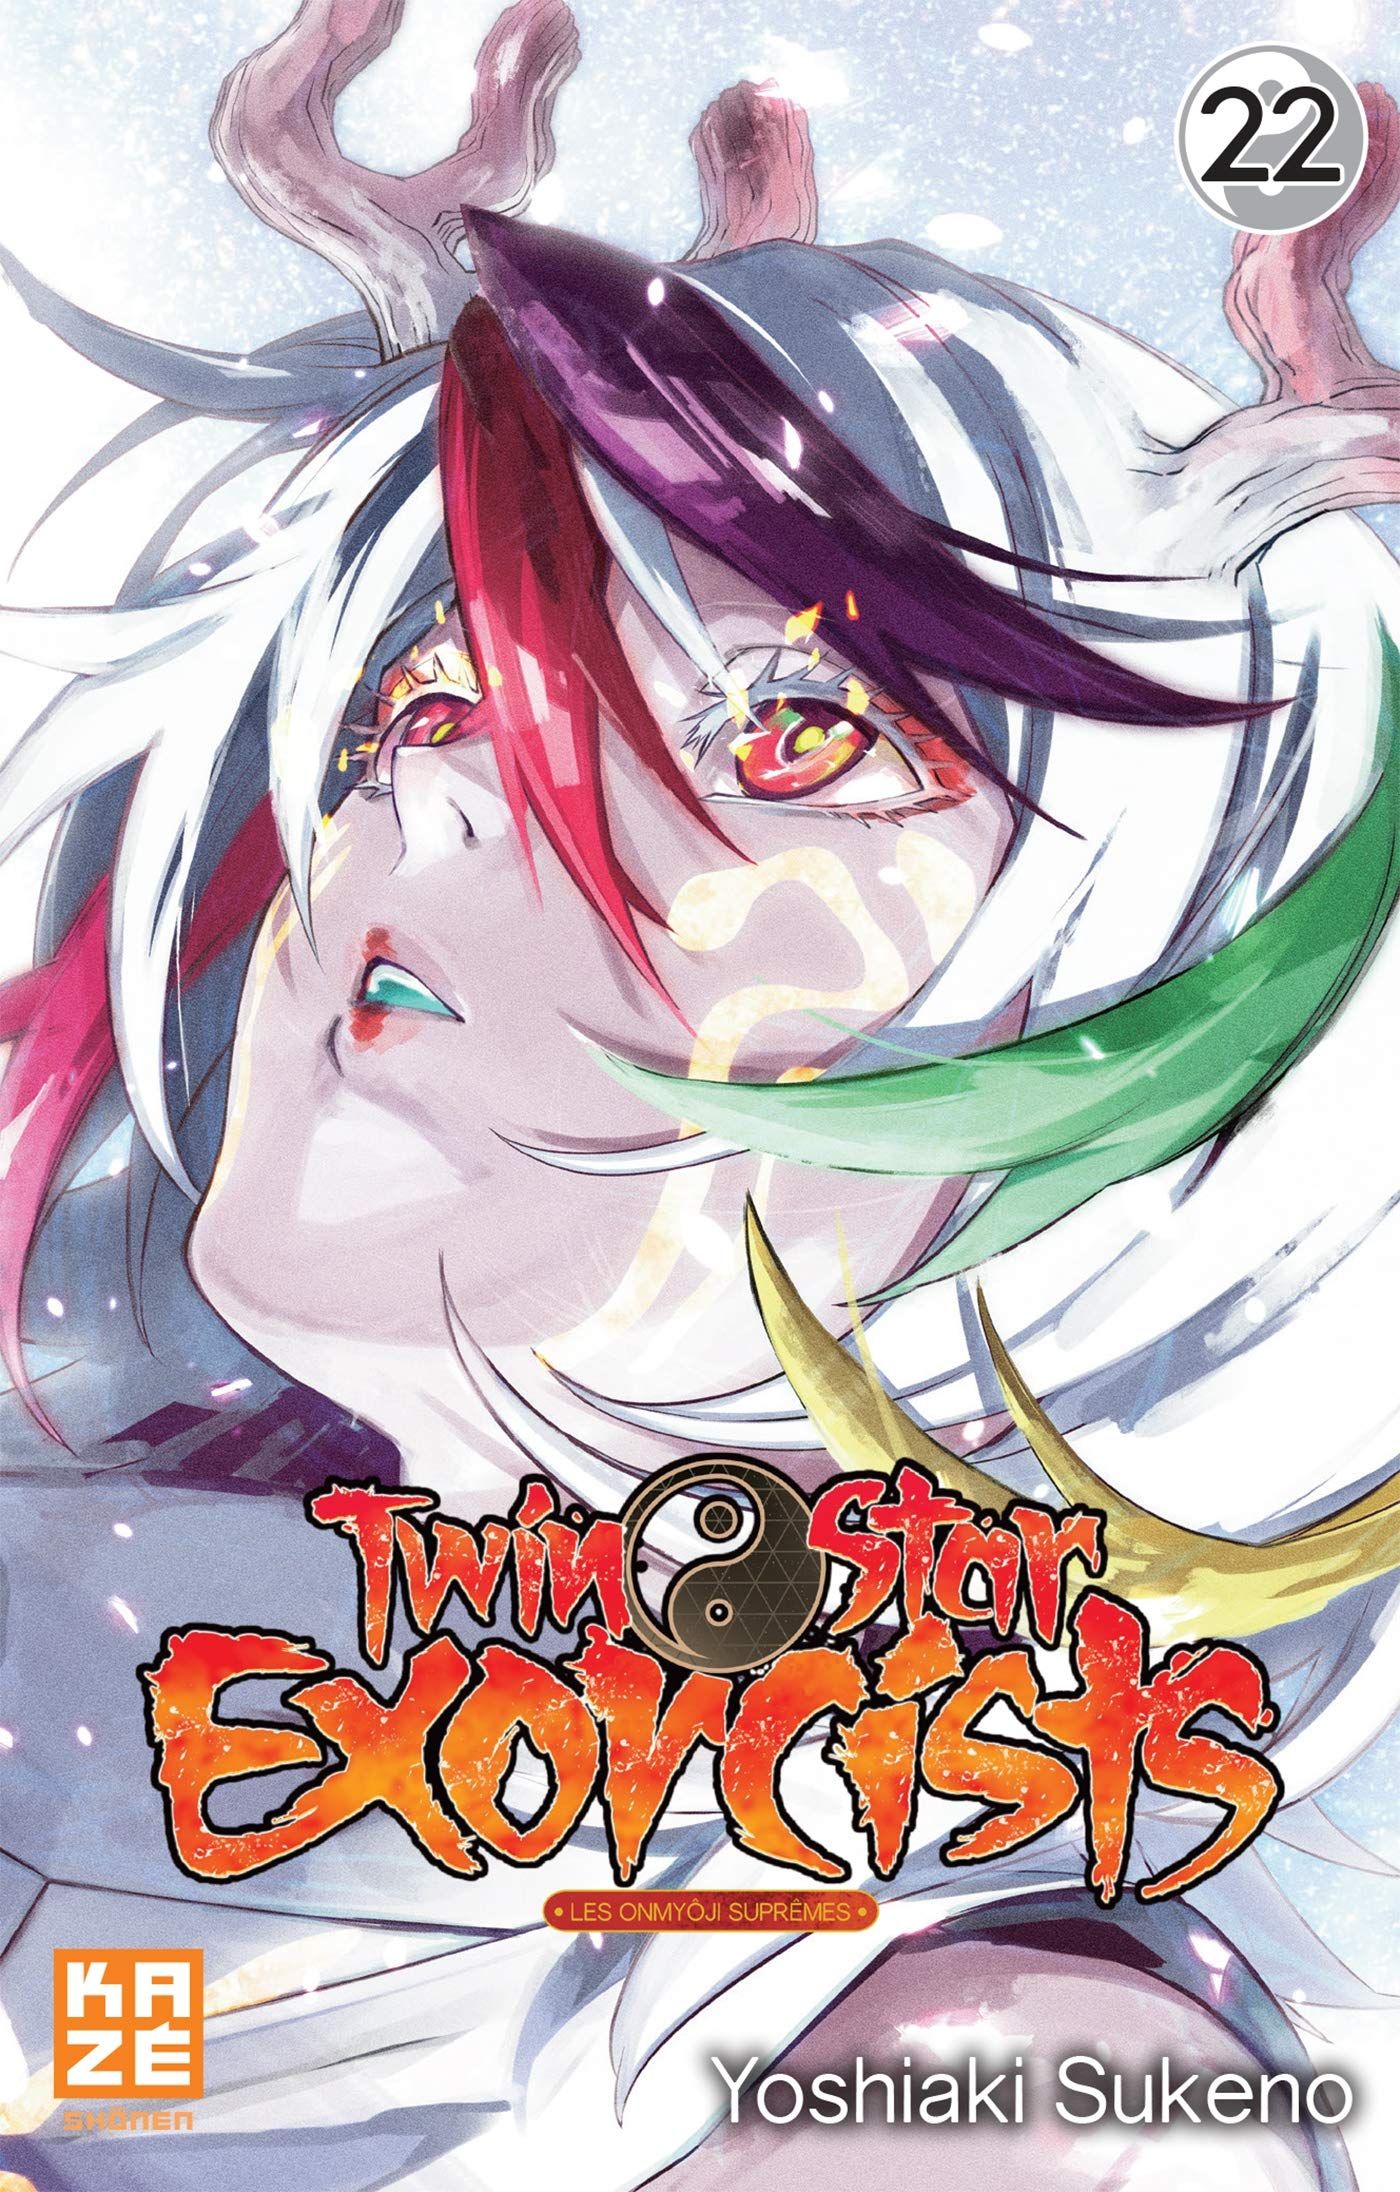 Sortie Manga au Québec JUIN 2021 Twin-satr-exorcist-22-kaze